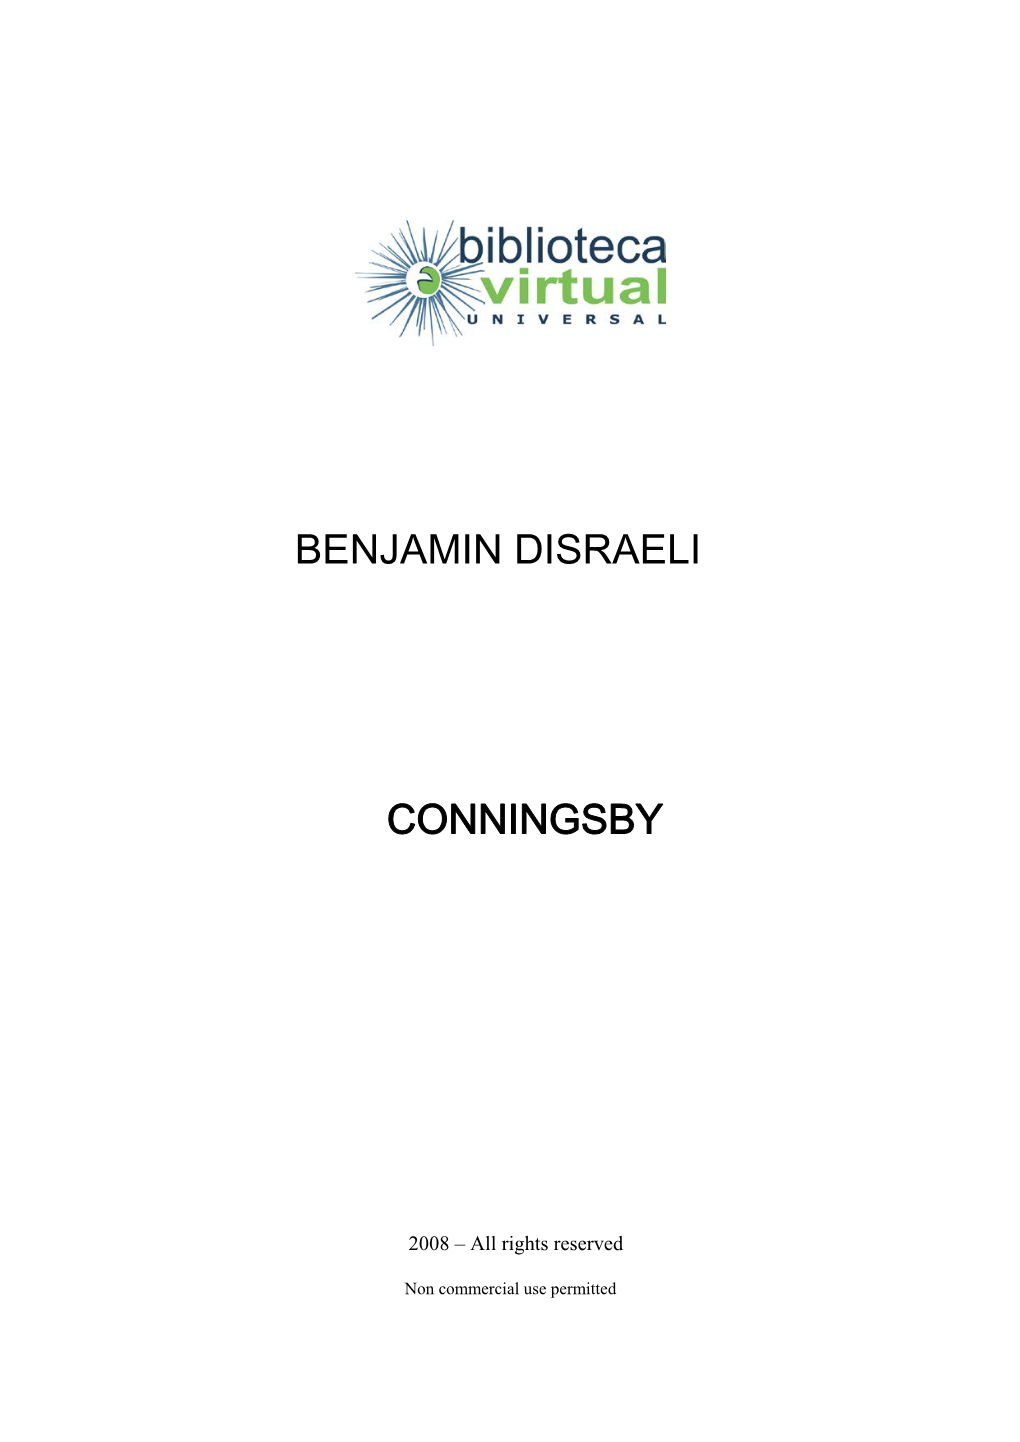 Benjamin Disraeli Conningsby